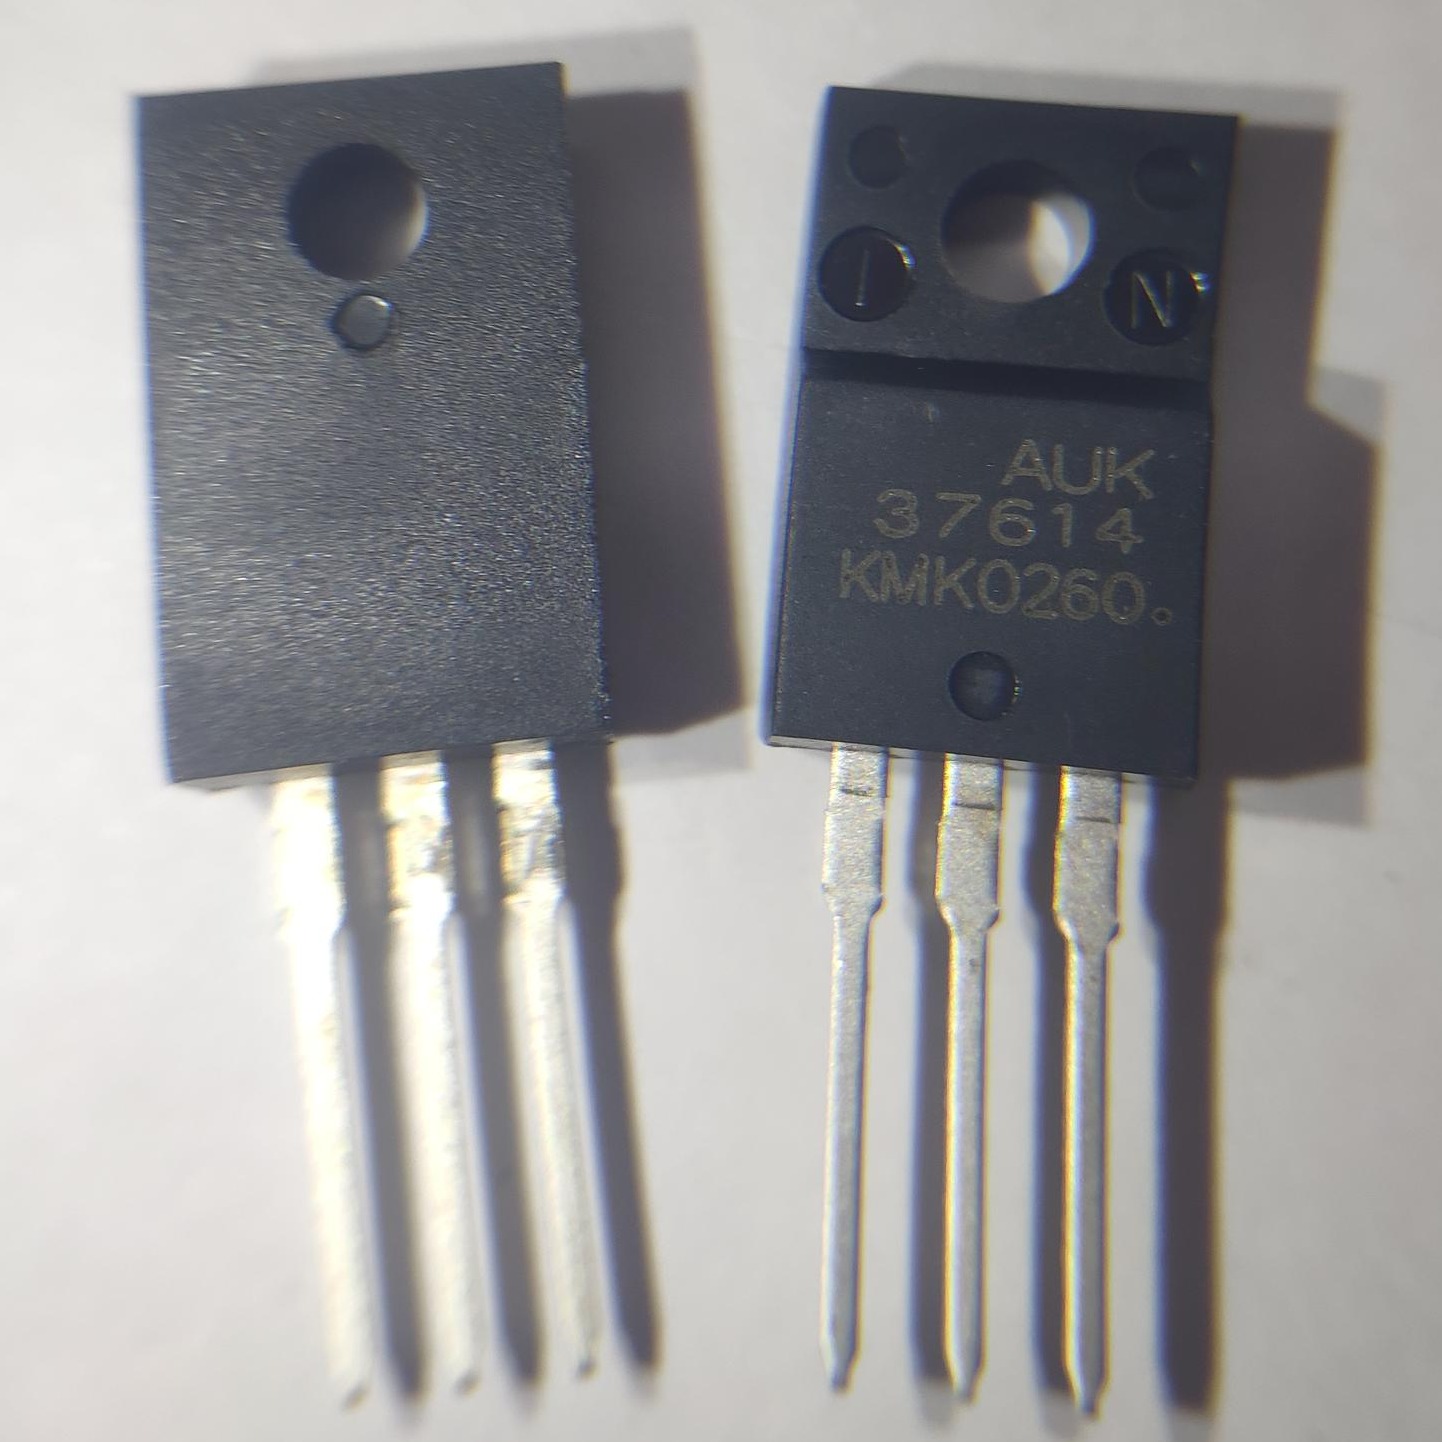 KMK0260F TO-220  KODENSHI AUK  触摸芯片 单片机 电源管理芯片 MOS管专业代理商